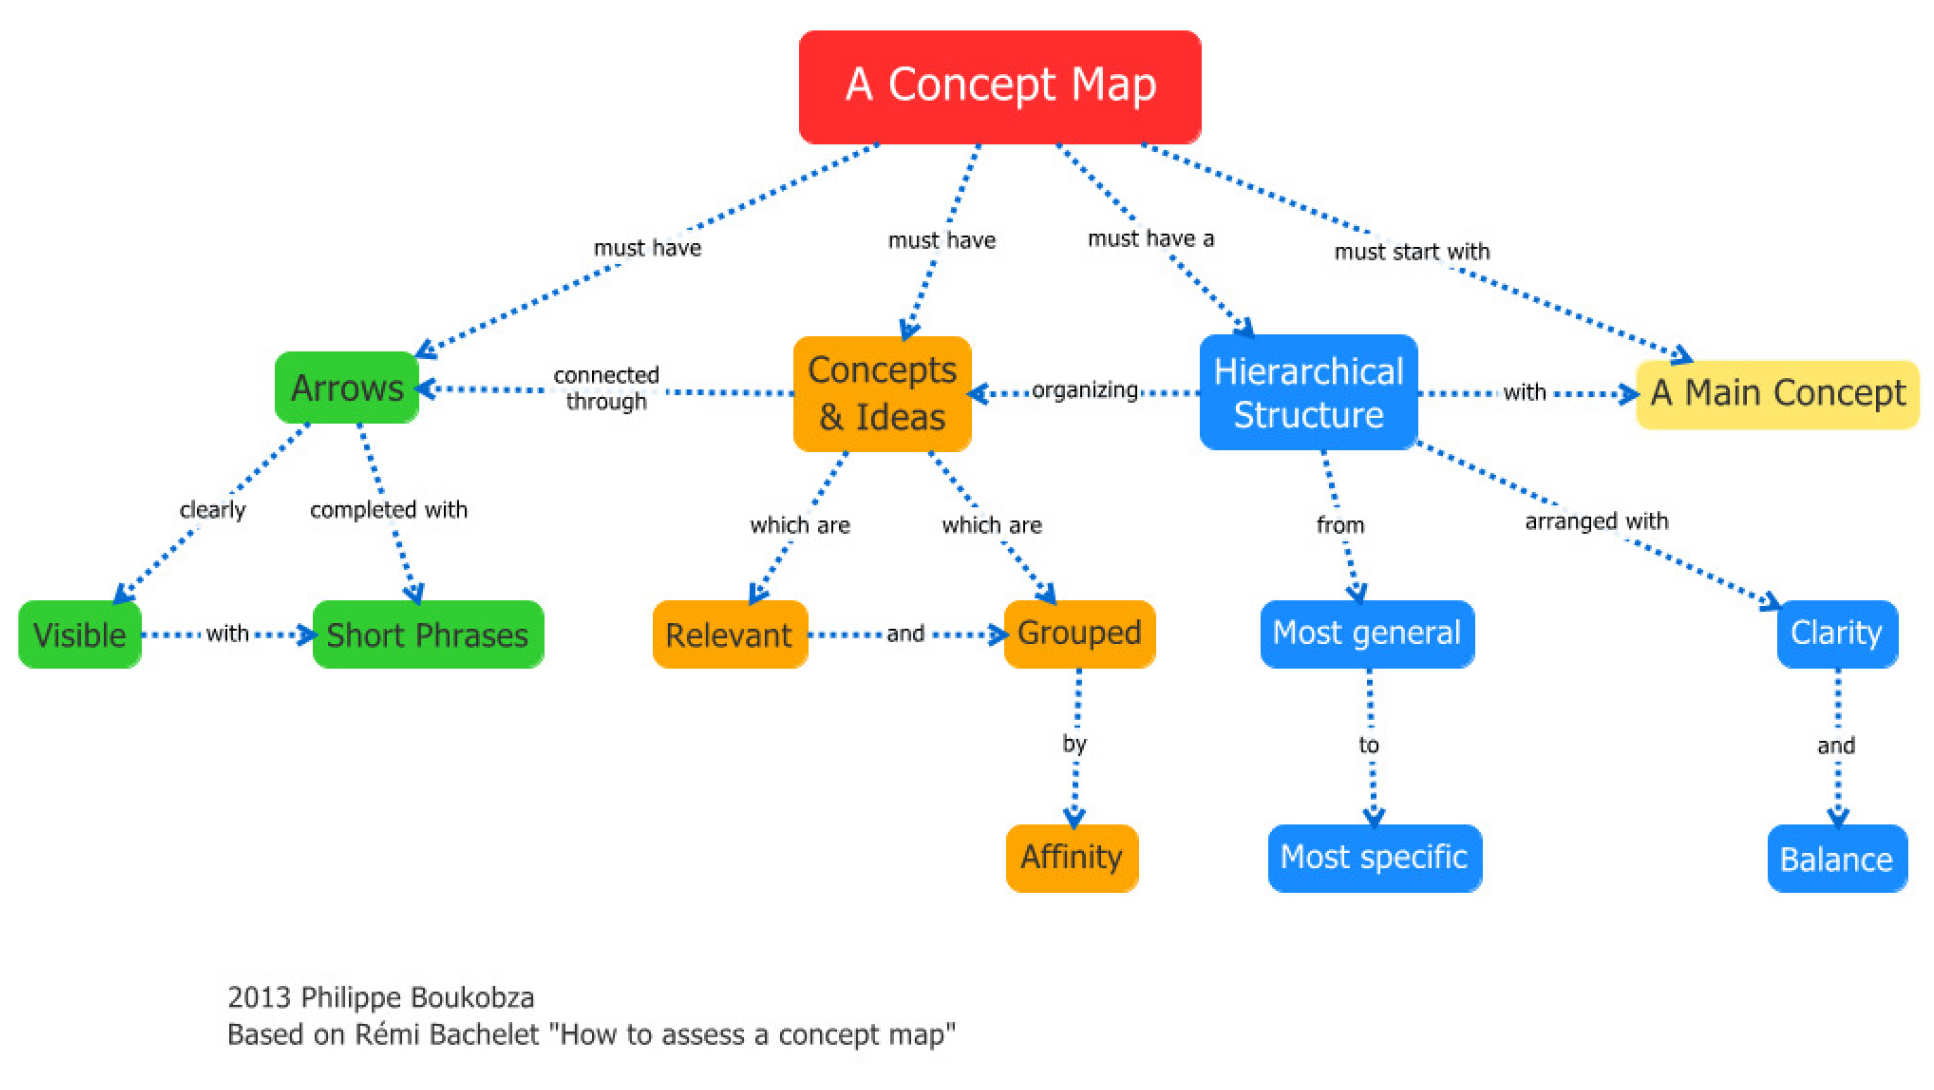 A concept map